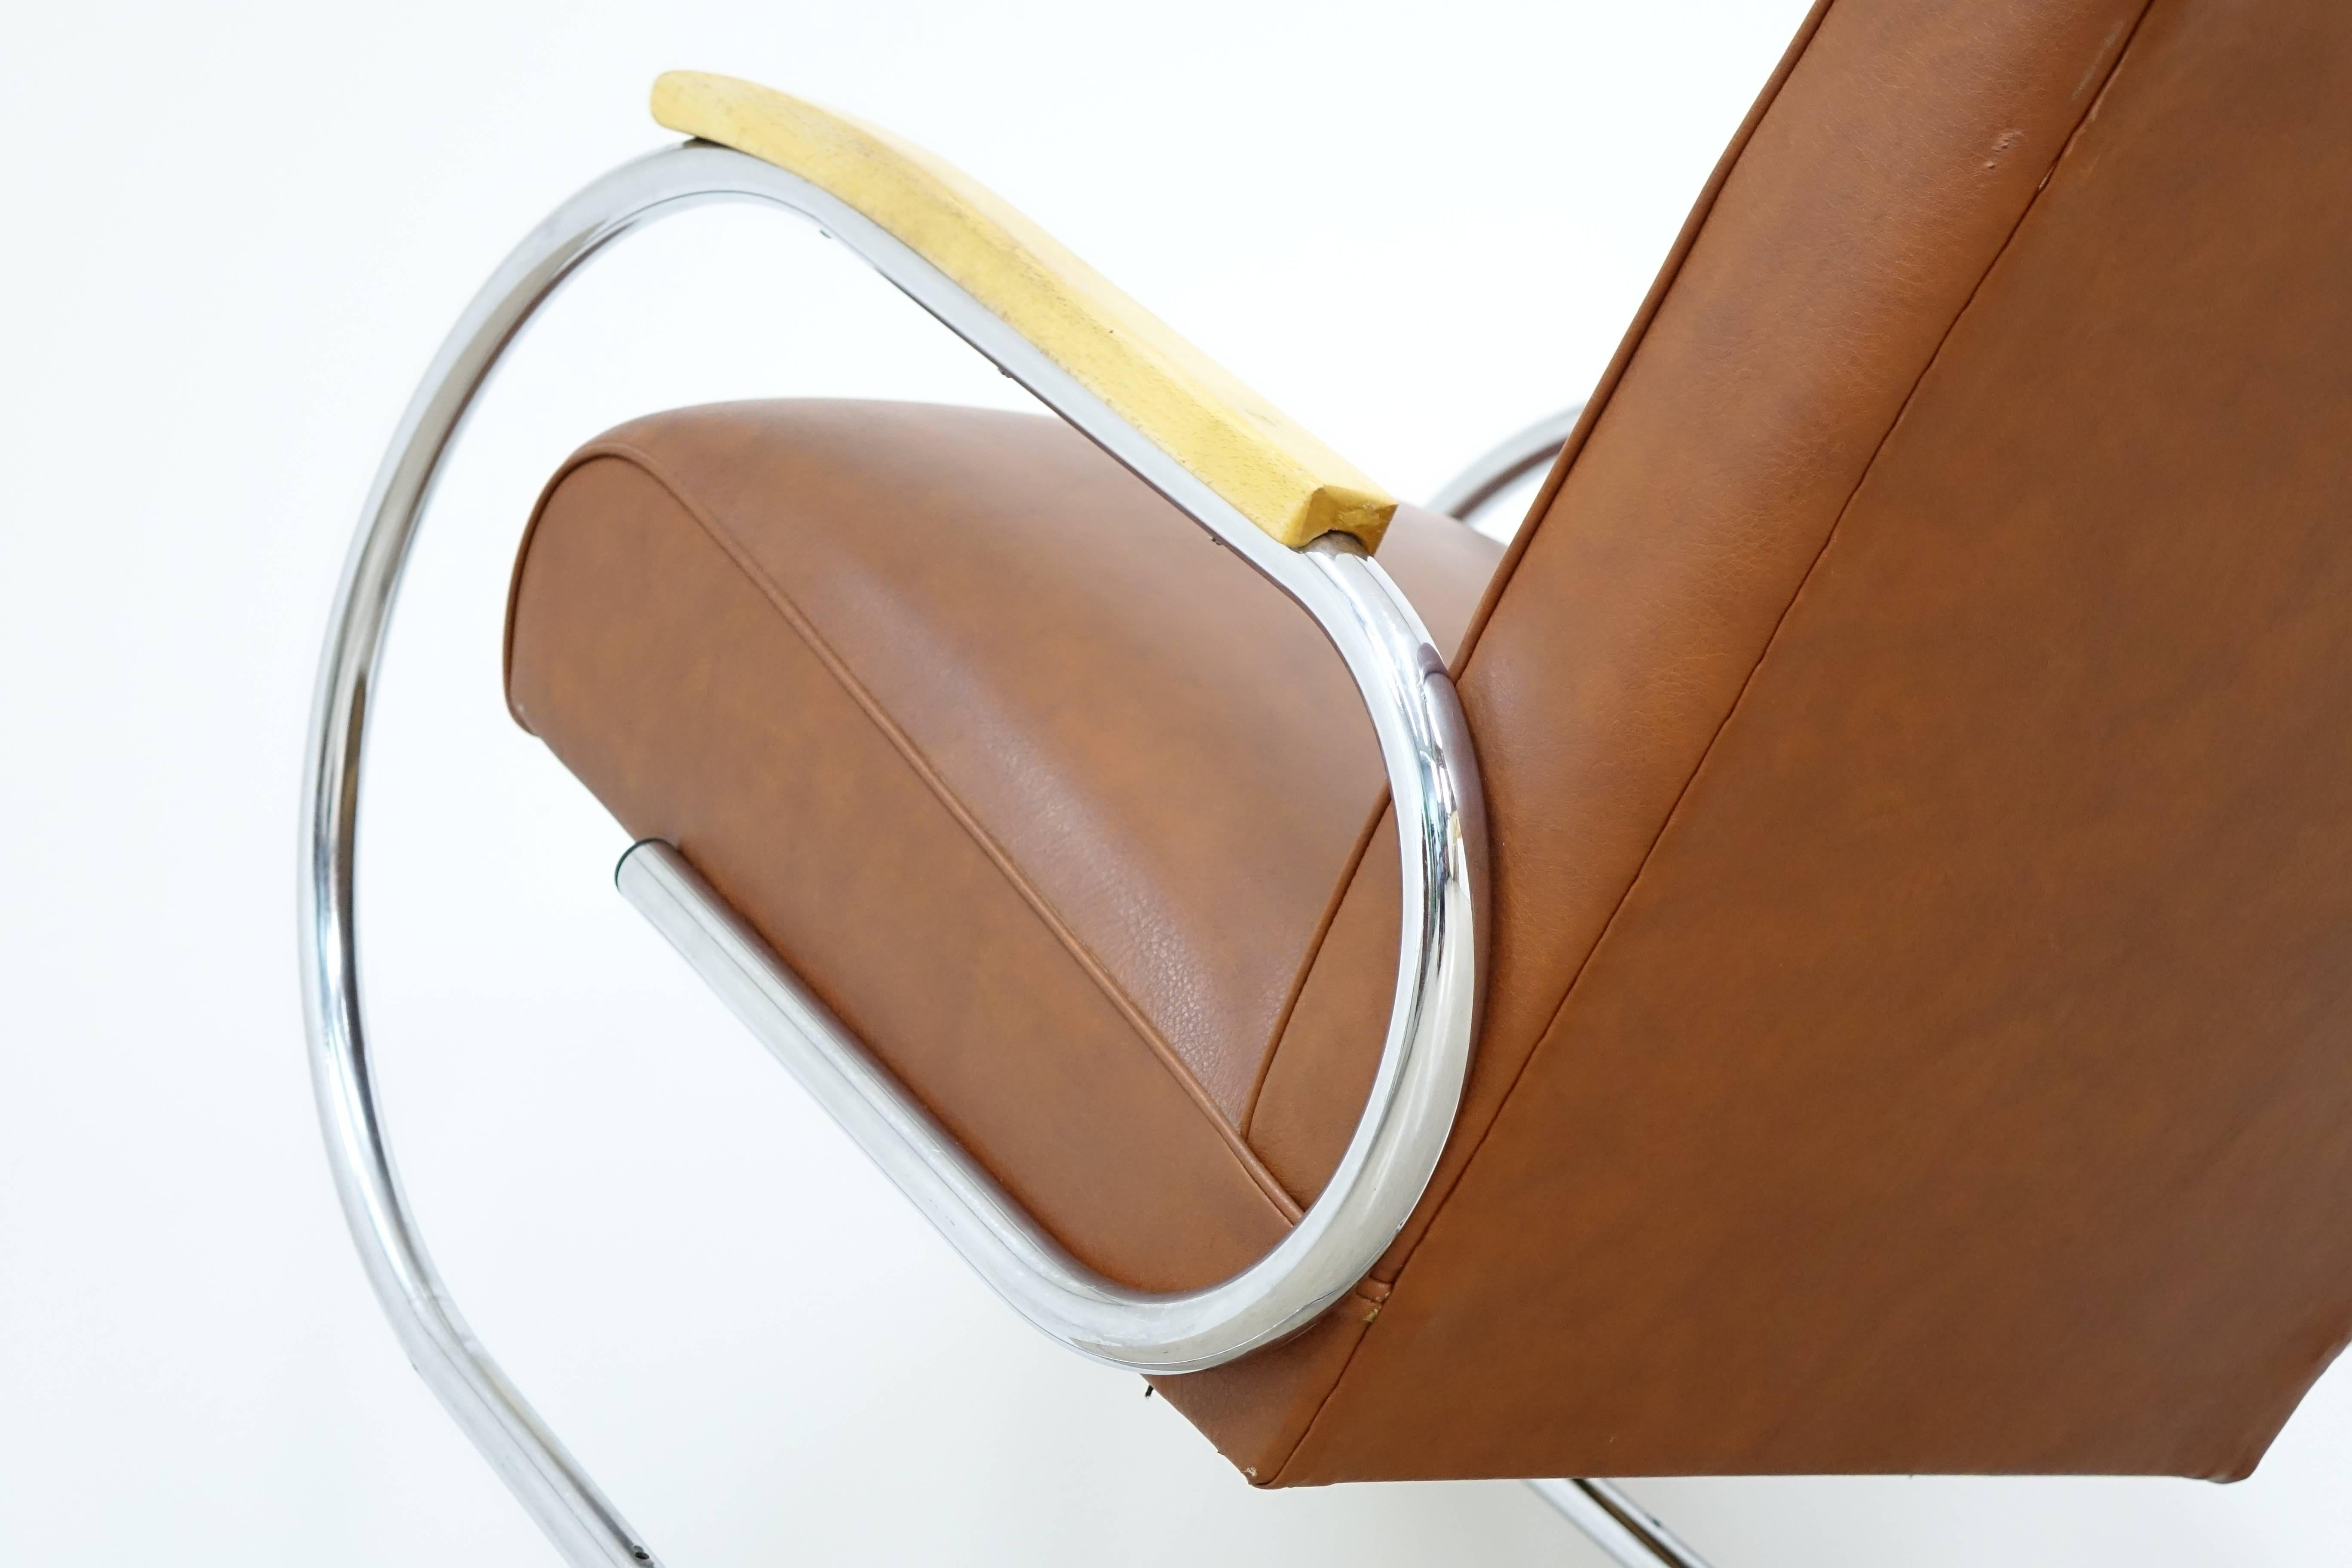 Early 20th Century Tubax Easy Chair Bauhaus 1920 Steel Tube Lounge Chair Breuer Art Deco